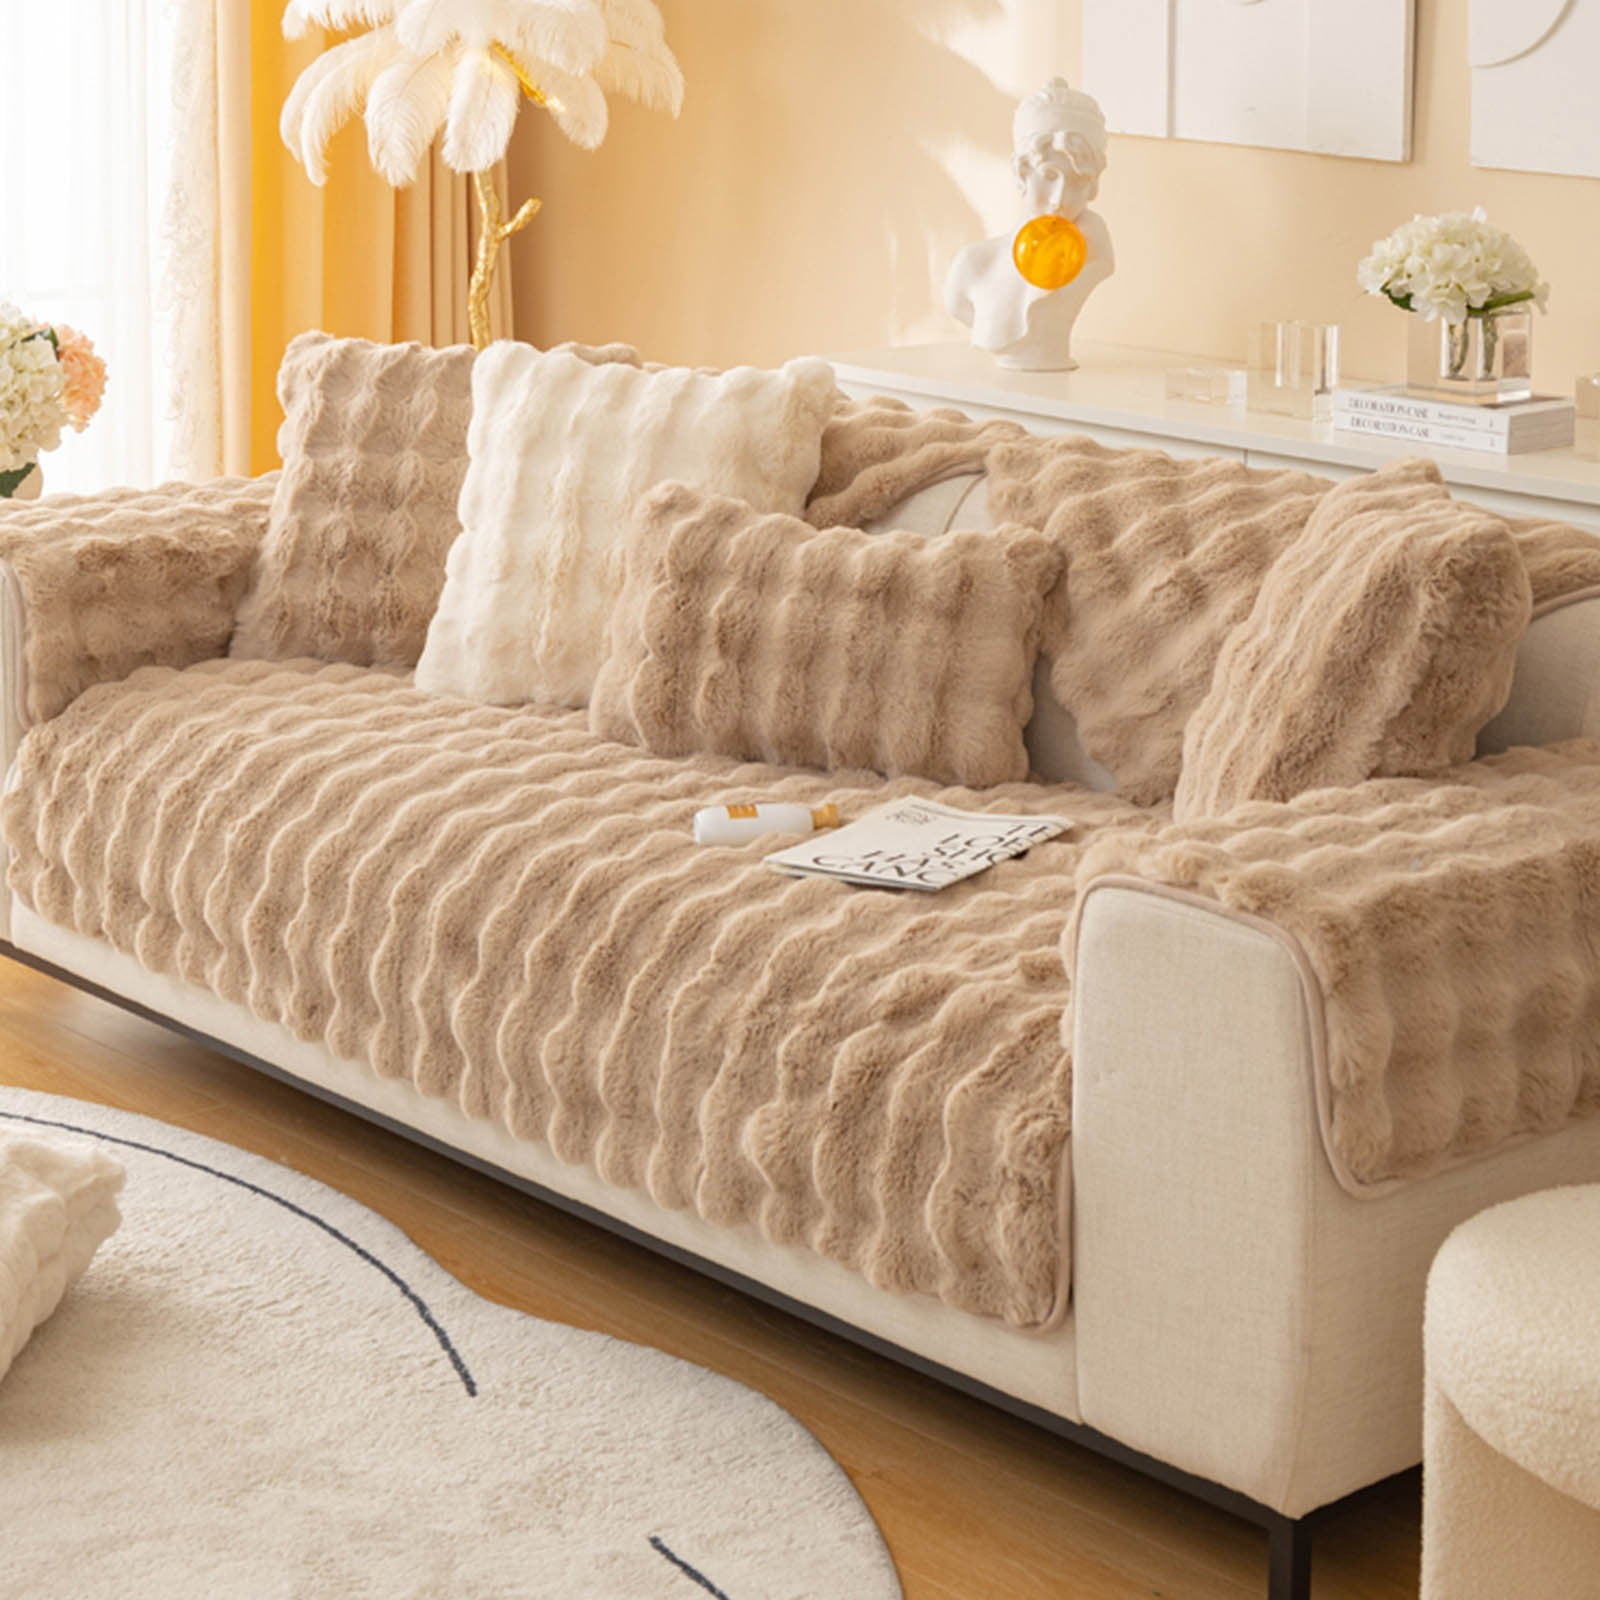 Winter Thick Plush Sofa Cushion Soft Warm Non-slip Sofa Towel 1/2/3/4 Seats  Slipcover Universal Sofa Cover for Living Room Decor